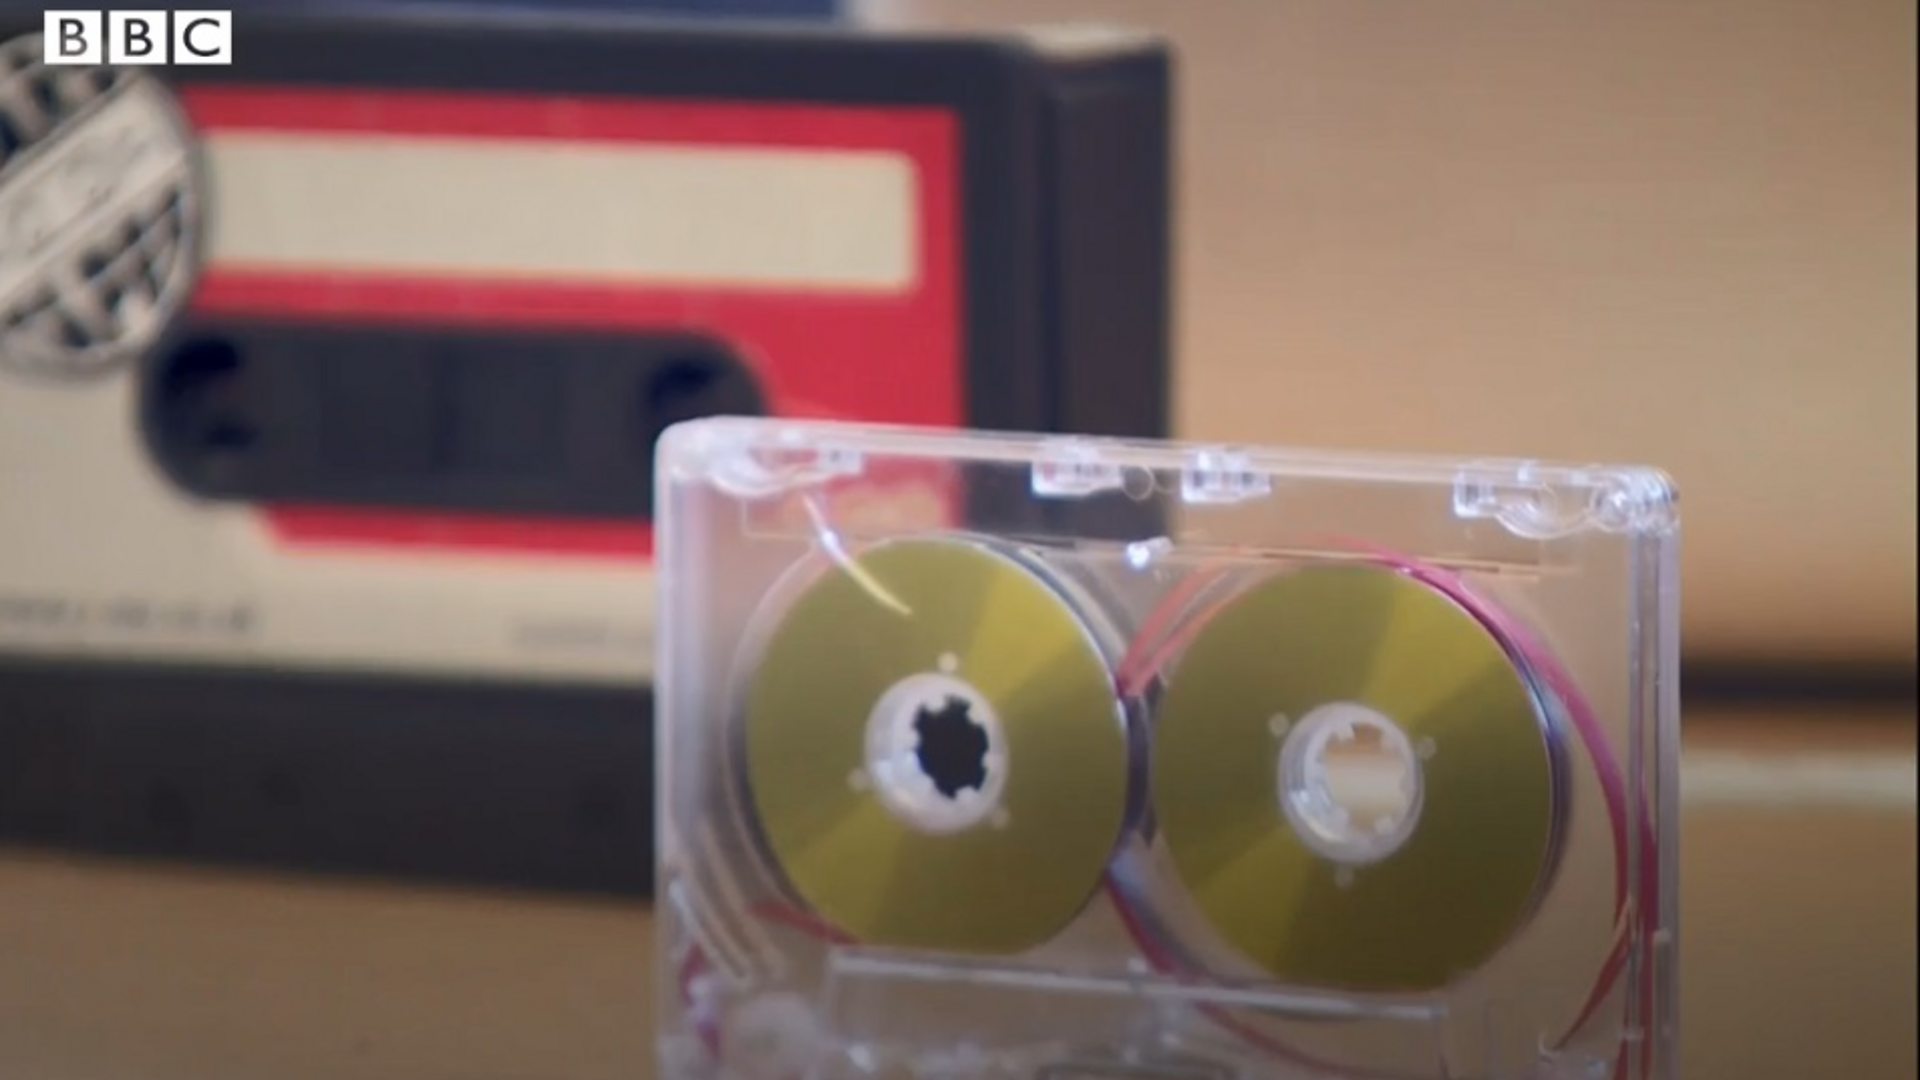 Cassette tapes making a comeback, cassette 